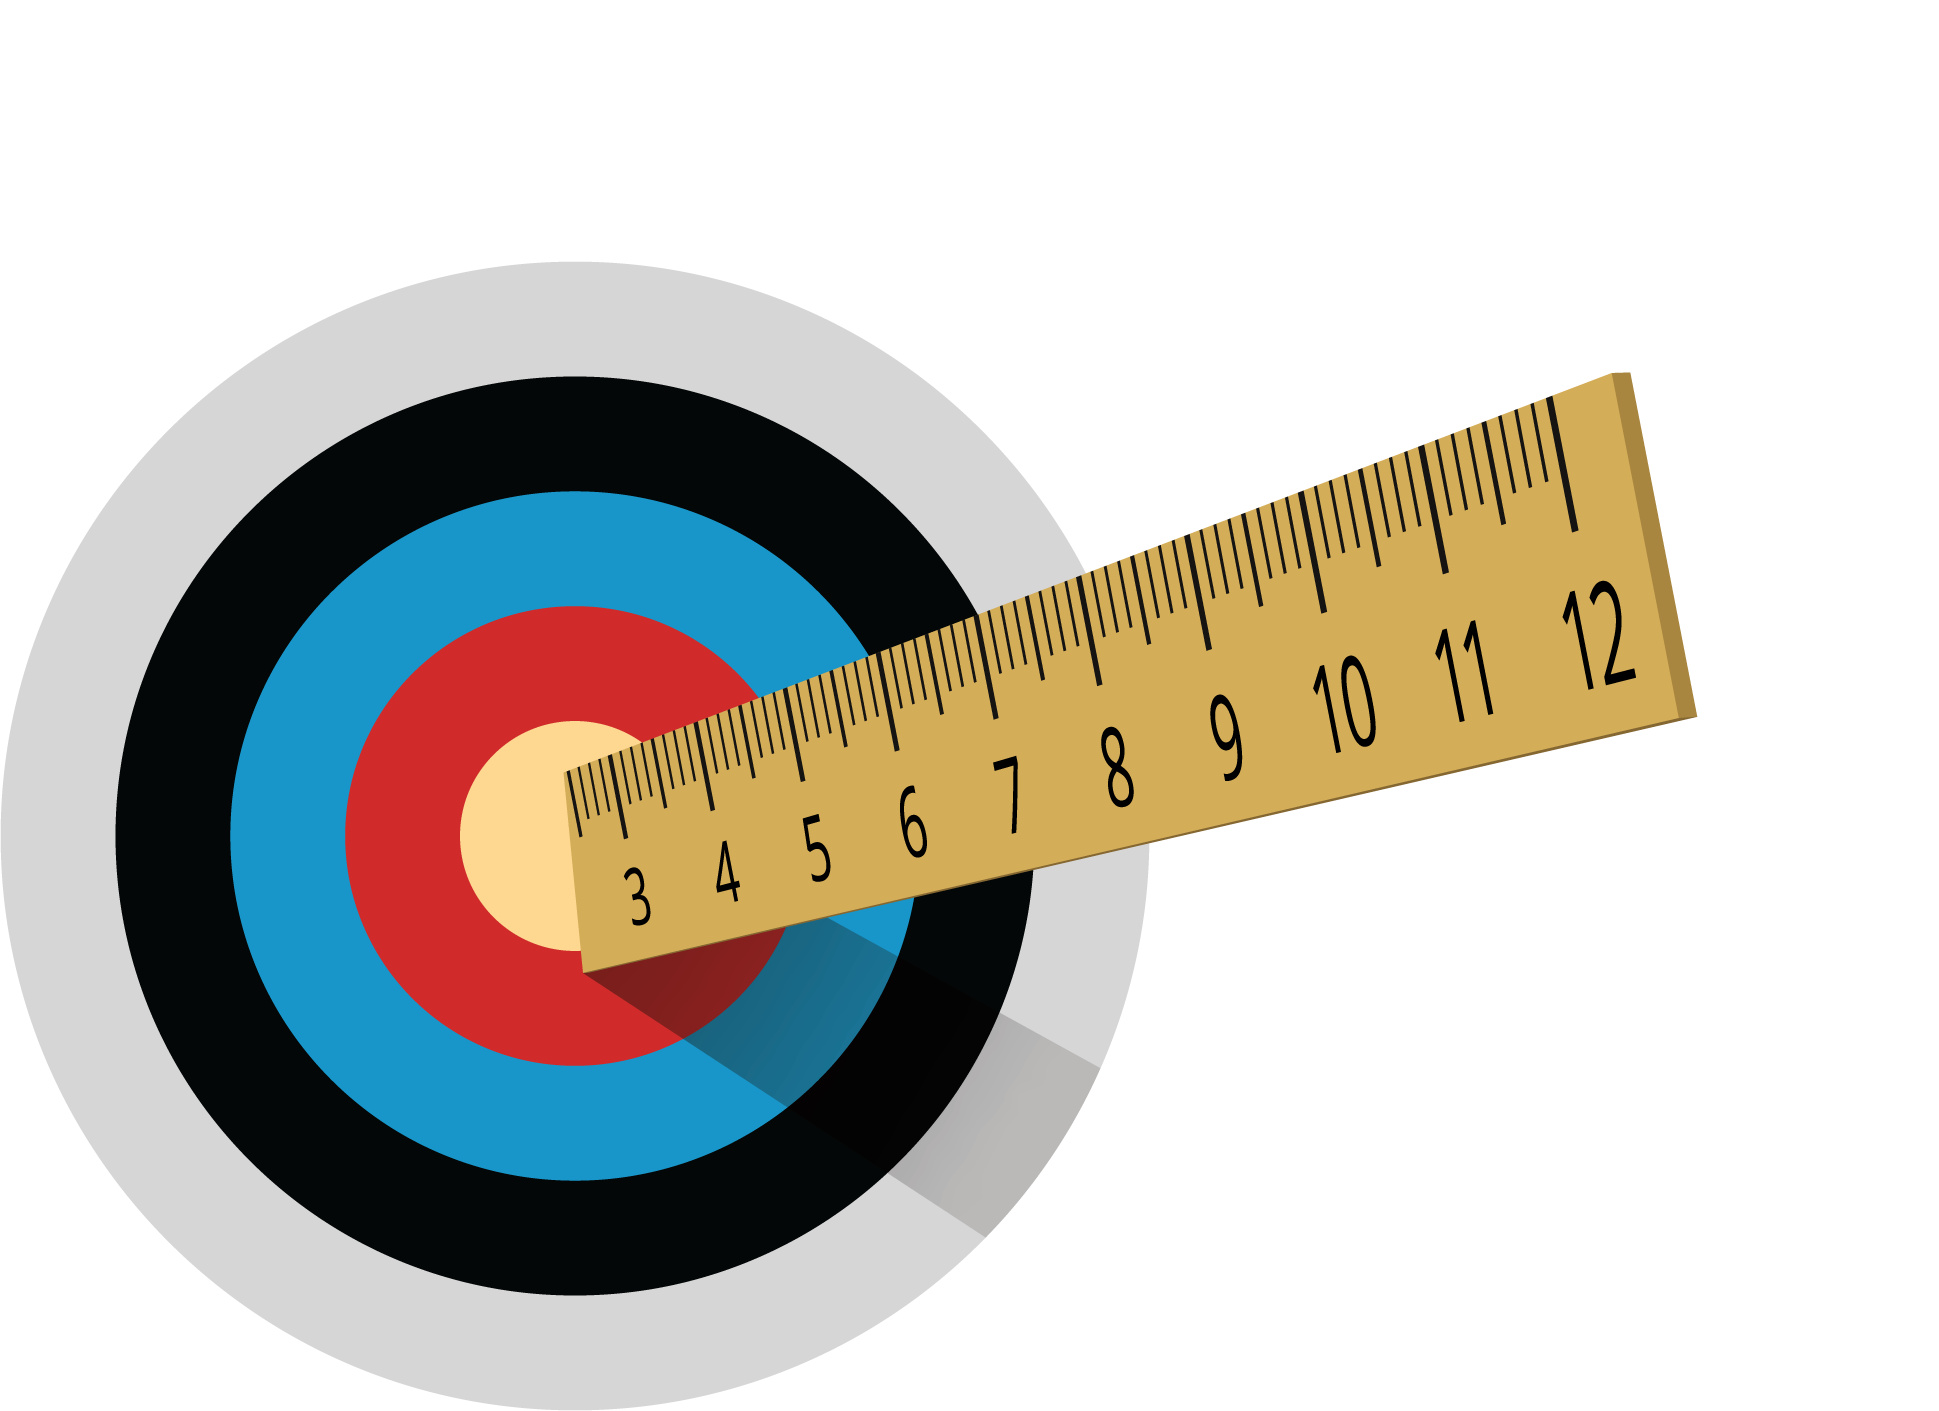 Center. Target Measurements